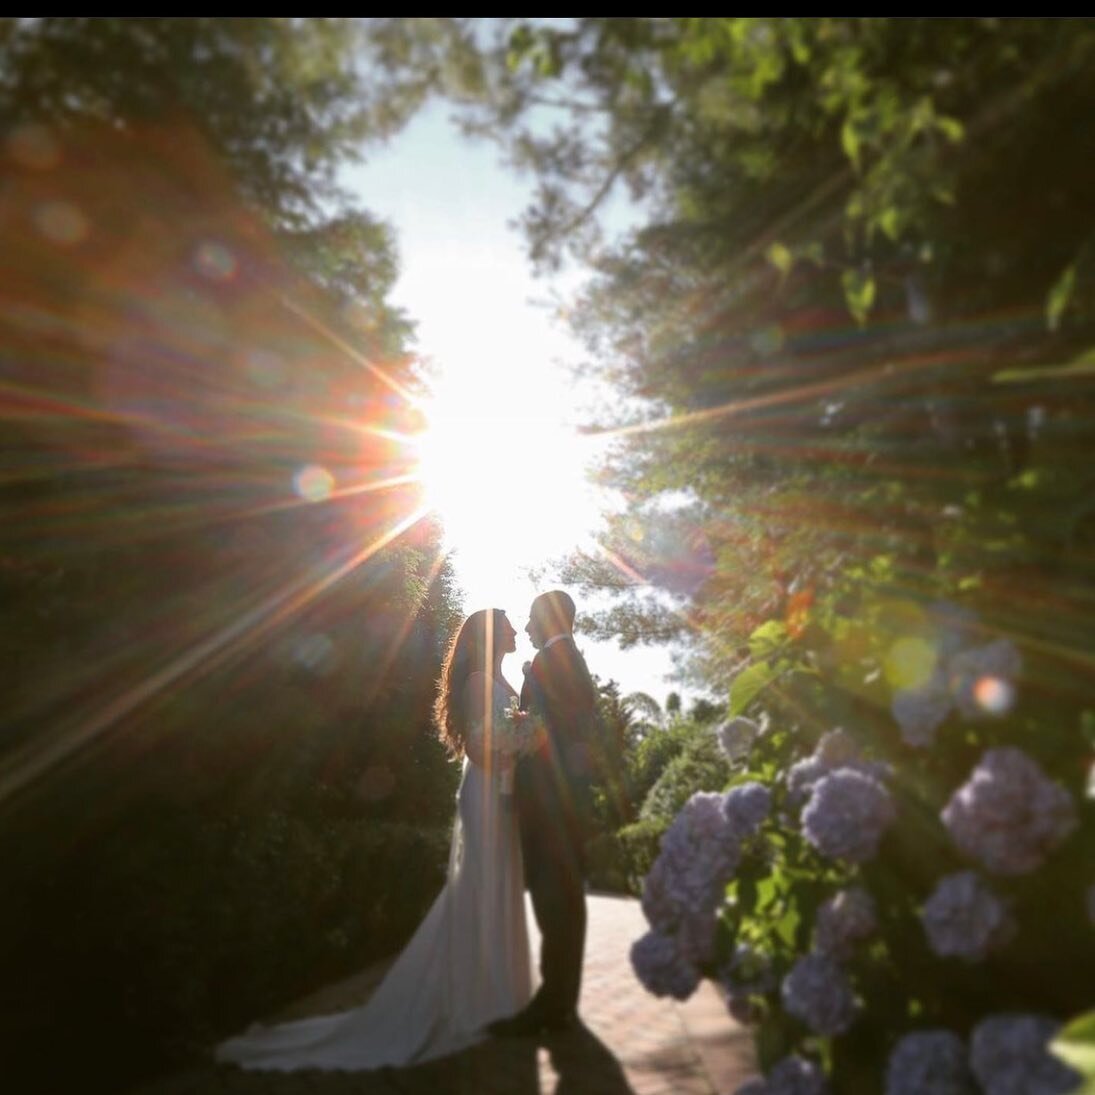 A magical moment shared between #newlyweds nestled in a sea of hydrangeas and warm sunshine. 

.
.
.
#longislandwedding #summerwedding #weddingseason2021 #bride #bridalbeauty #bridalhair #wedding #weddingdaybeauty #beachwedding #longisland #eastendLI